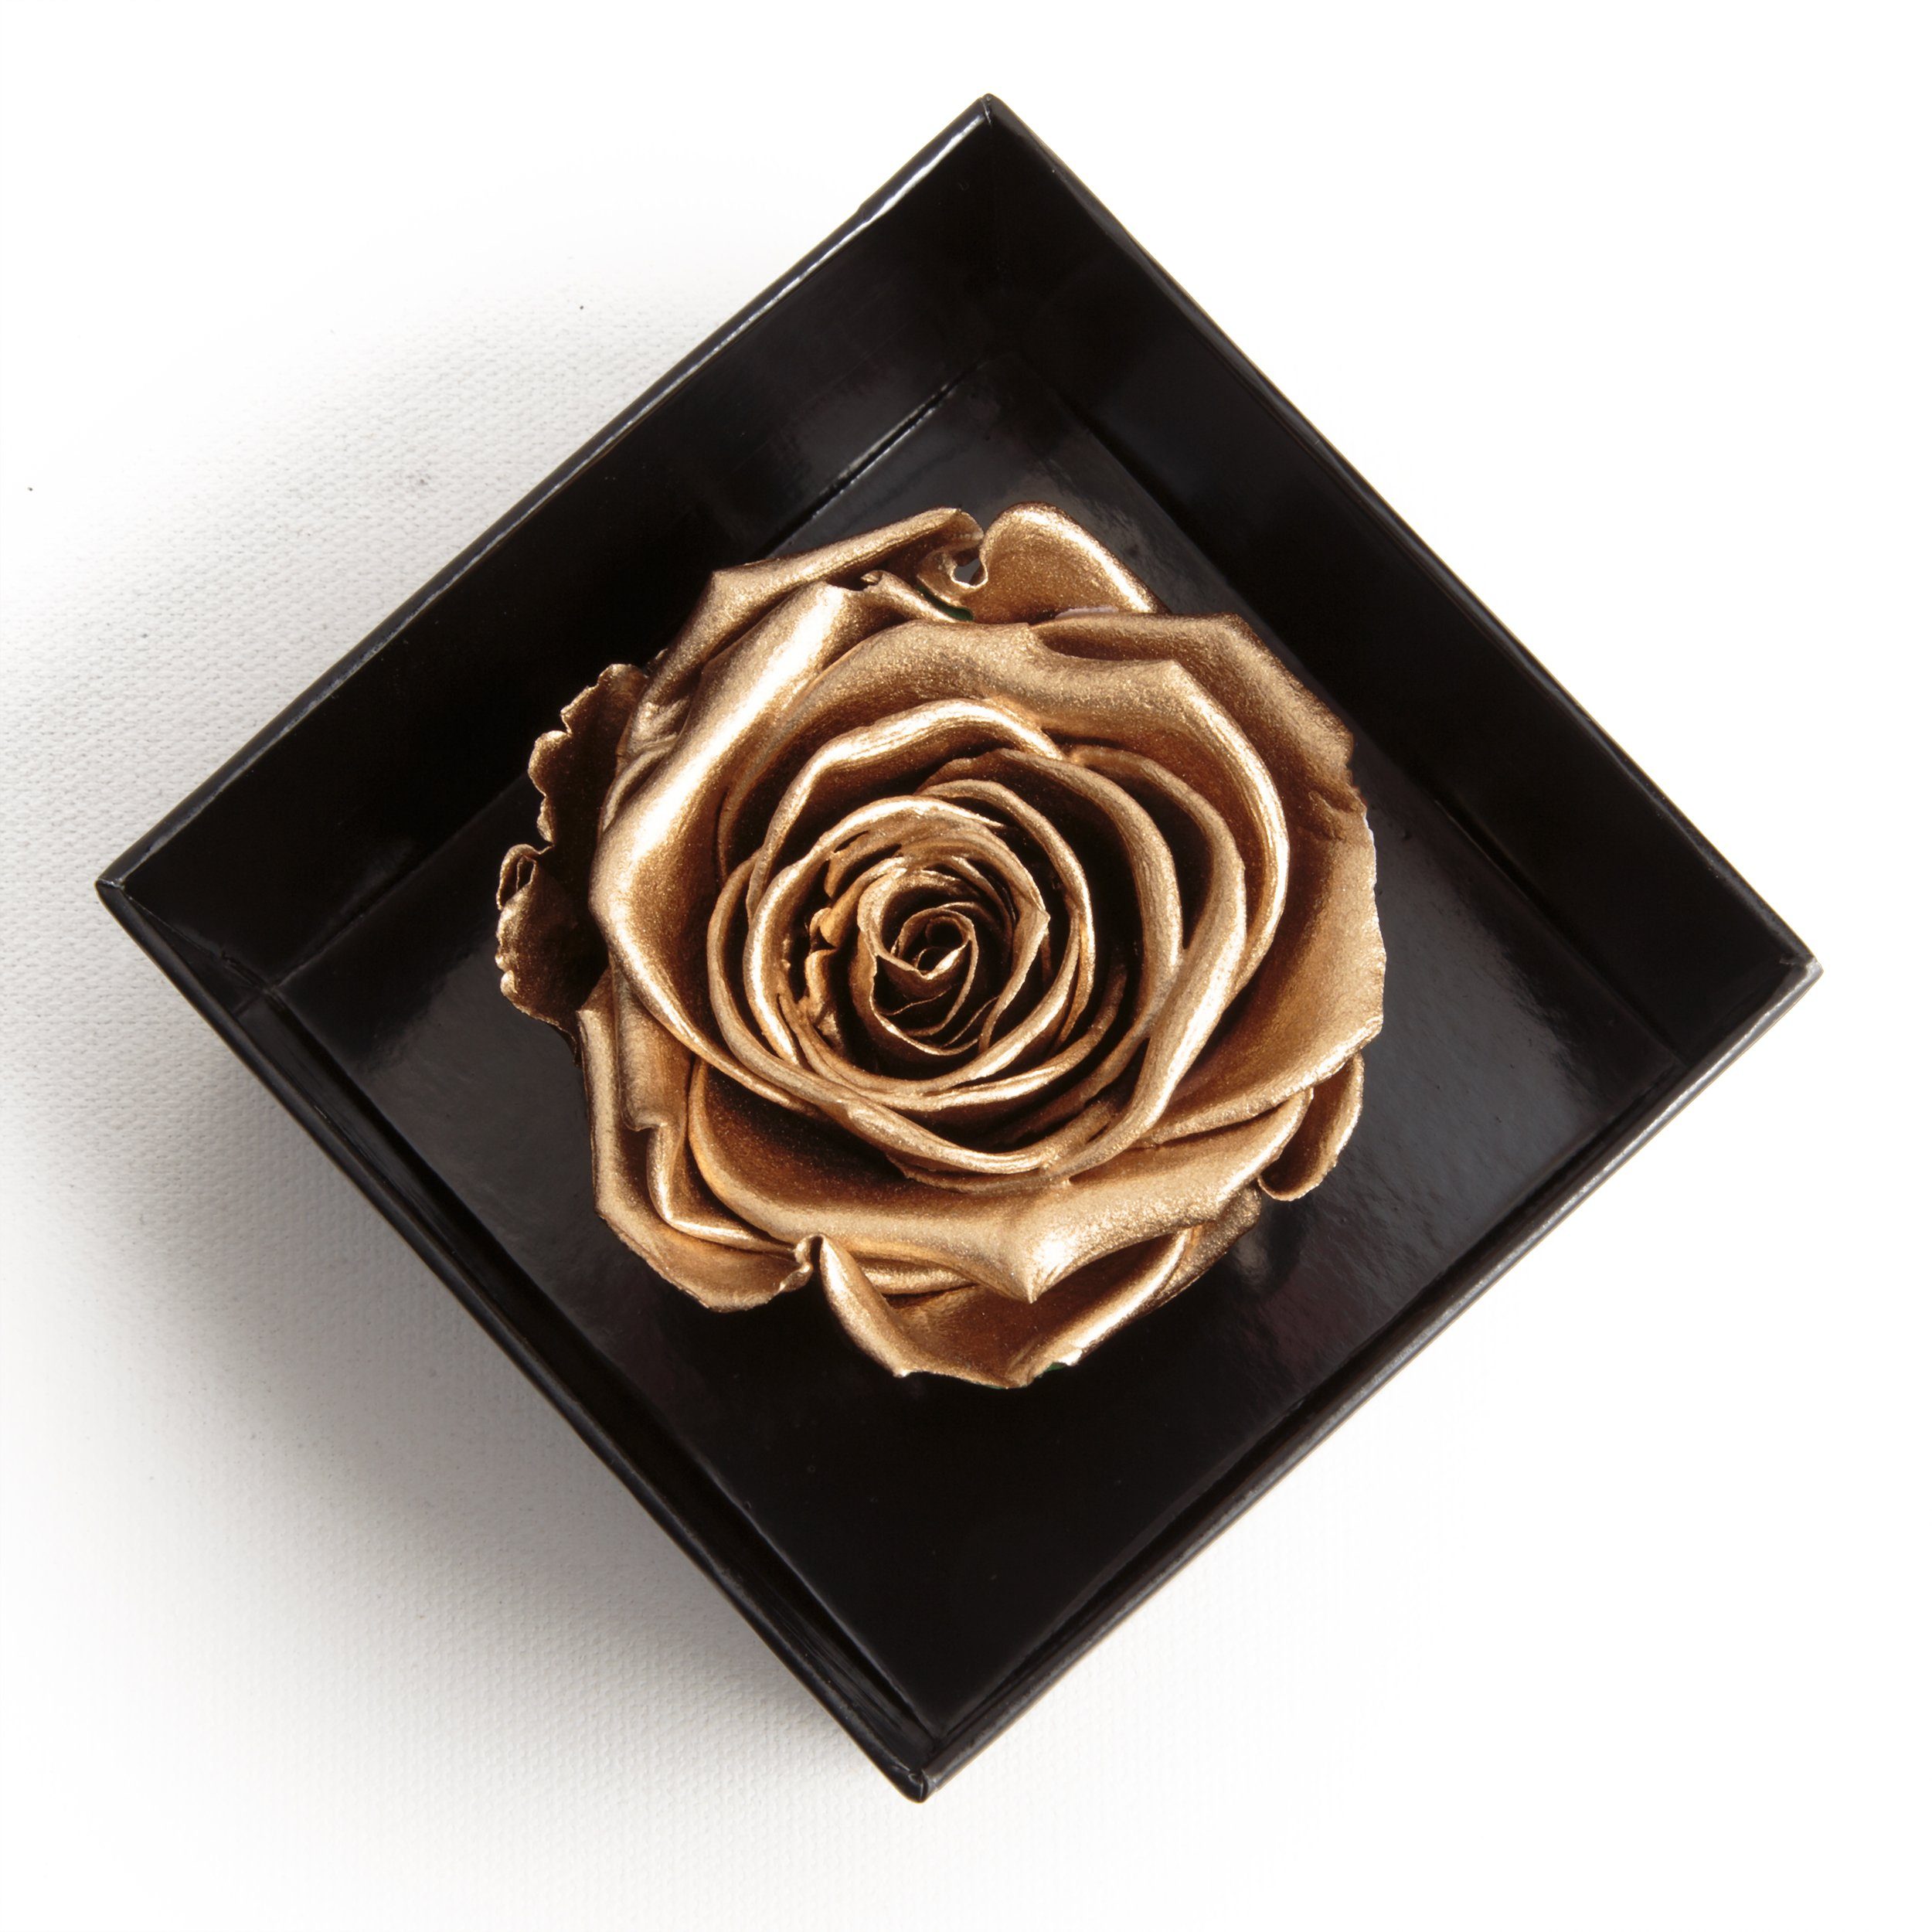 Echte Rose You Gold Liebesbeweis konserviert Idee Rose, Box 6 cm, SCHULZ ROSEMARIE Infinity Love Kunstblume Geschenk Heidelberg, Höhe I Rose